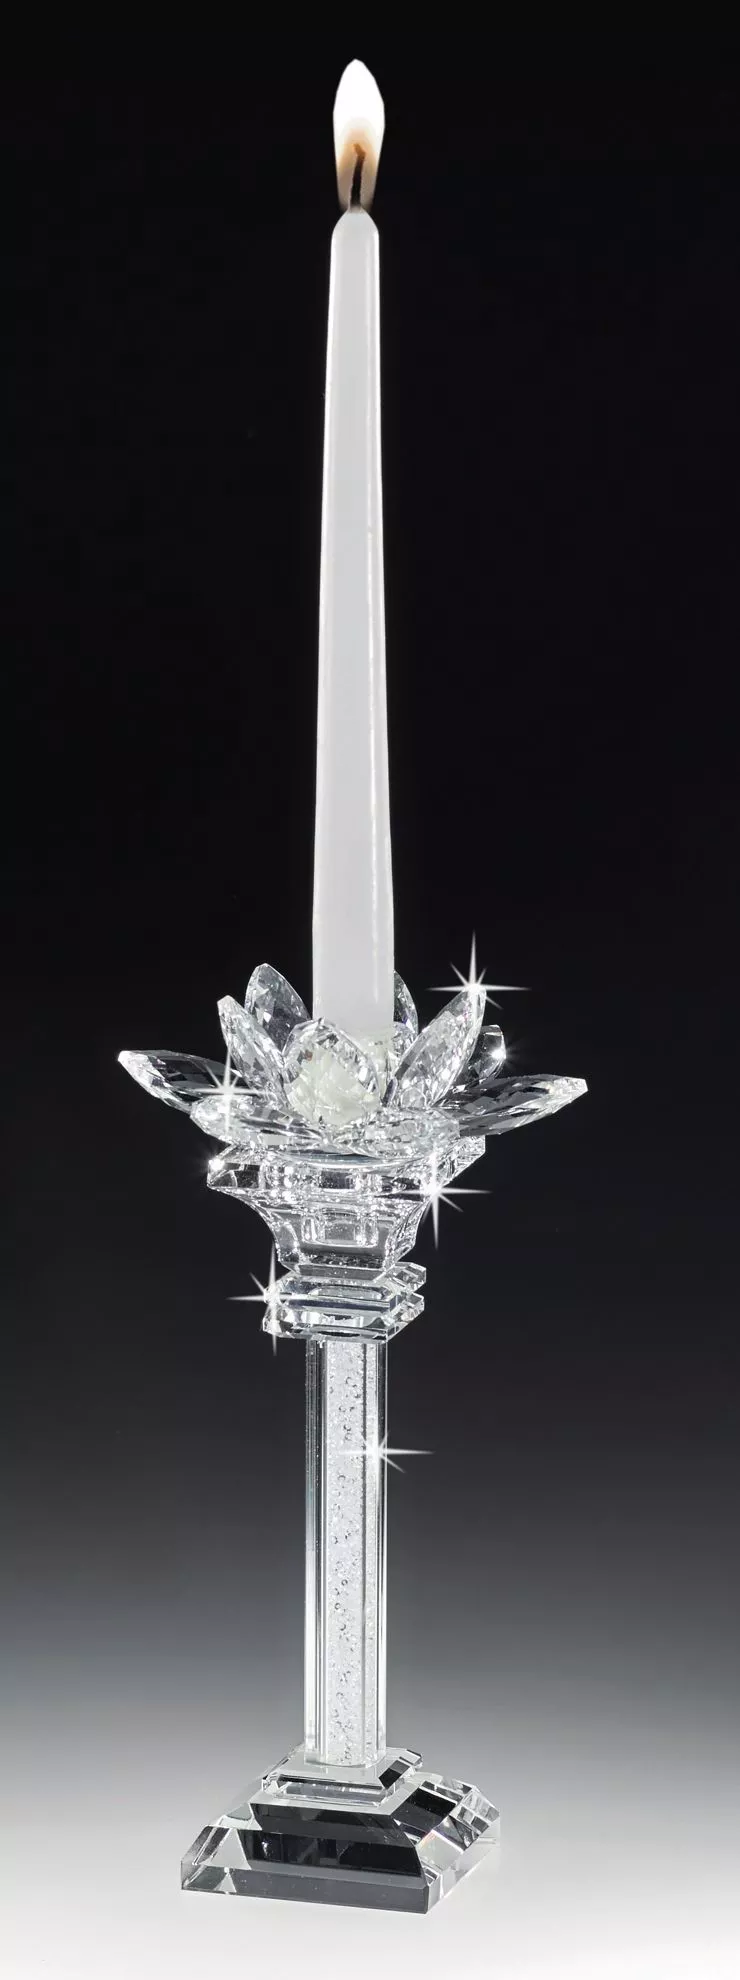 Portacandele da tavola singolo cristallo candeliere - 6084